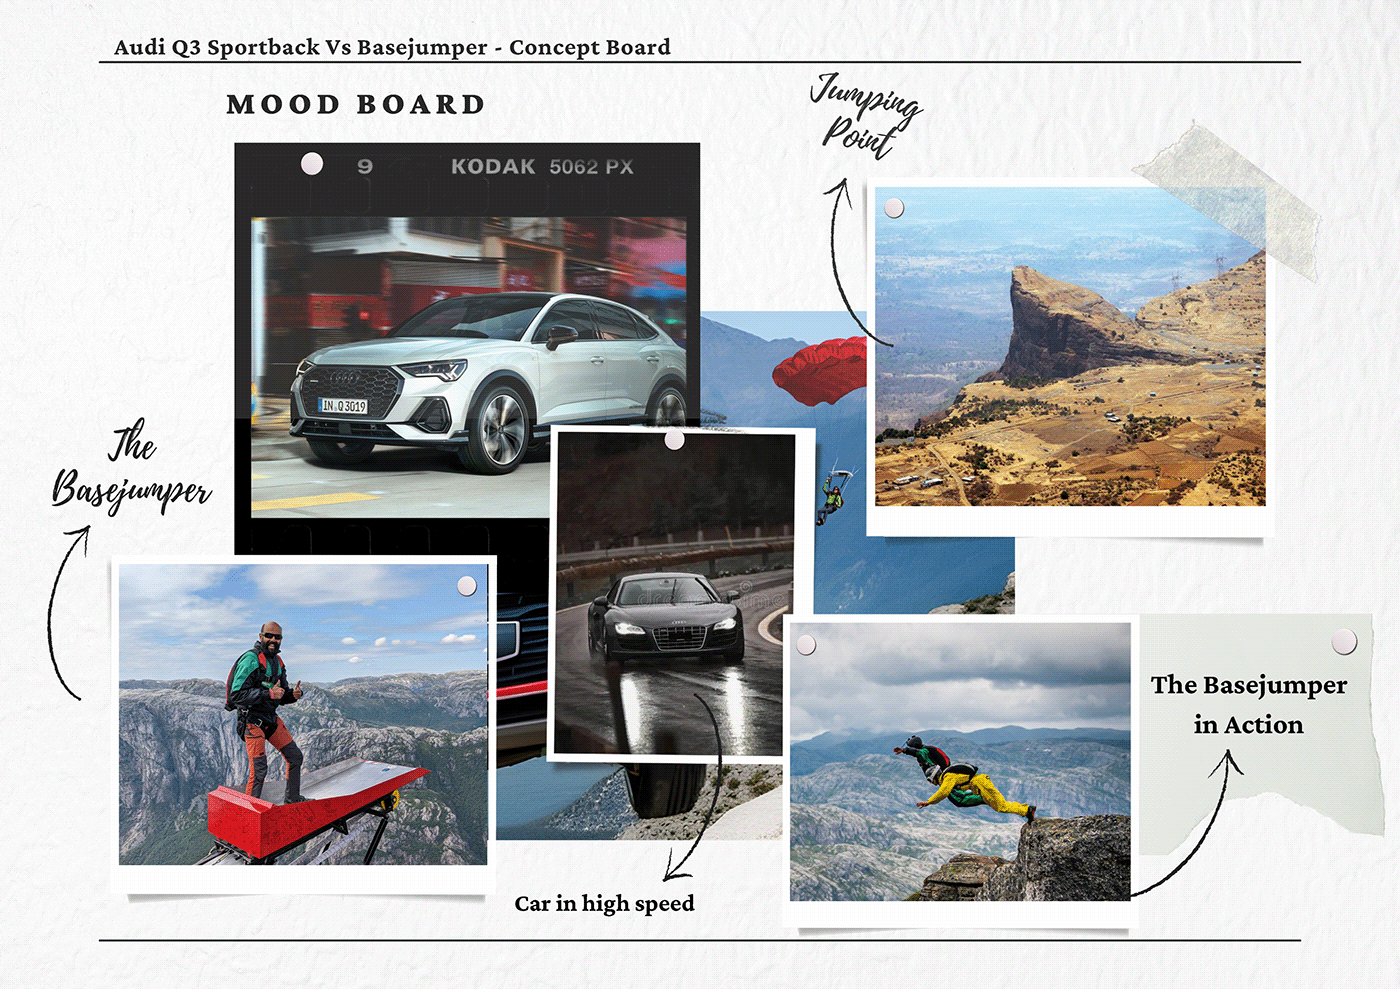 basejump Audi Q3 sportback race Car film grand tour video editing services youtube adventure sports Car vs basejumper